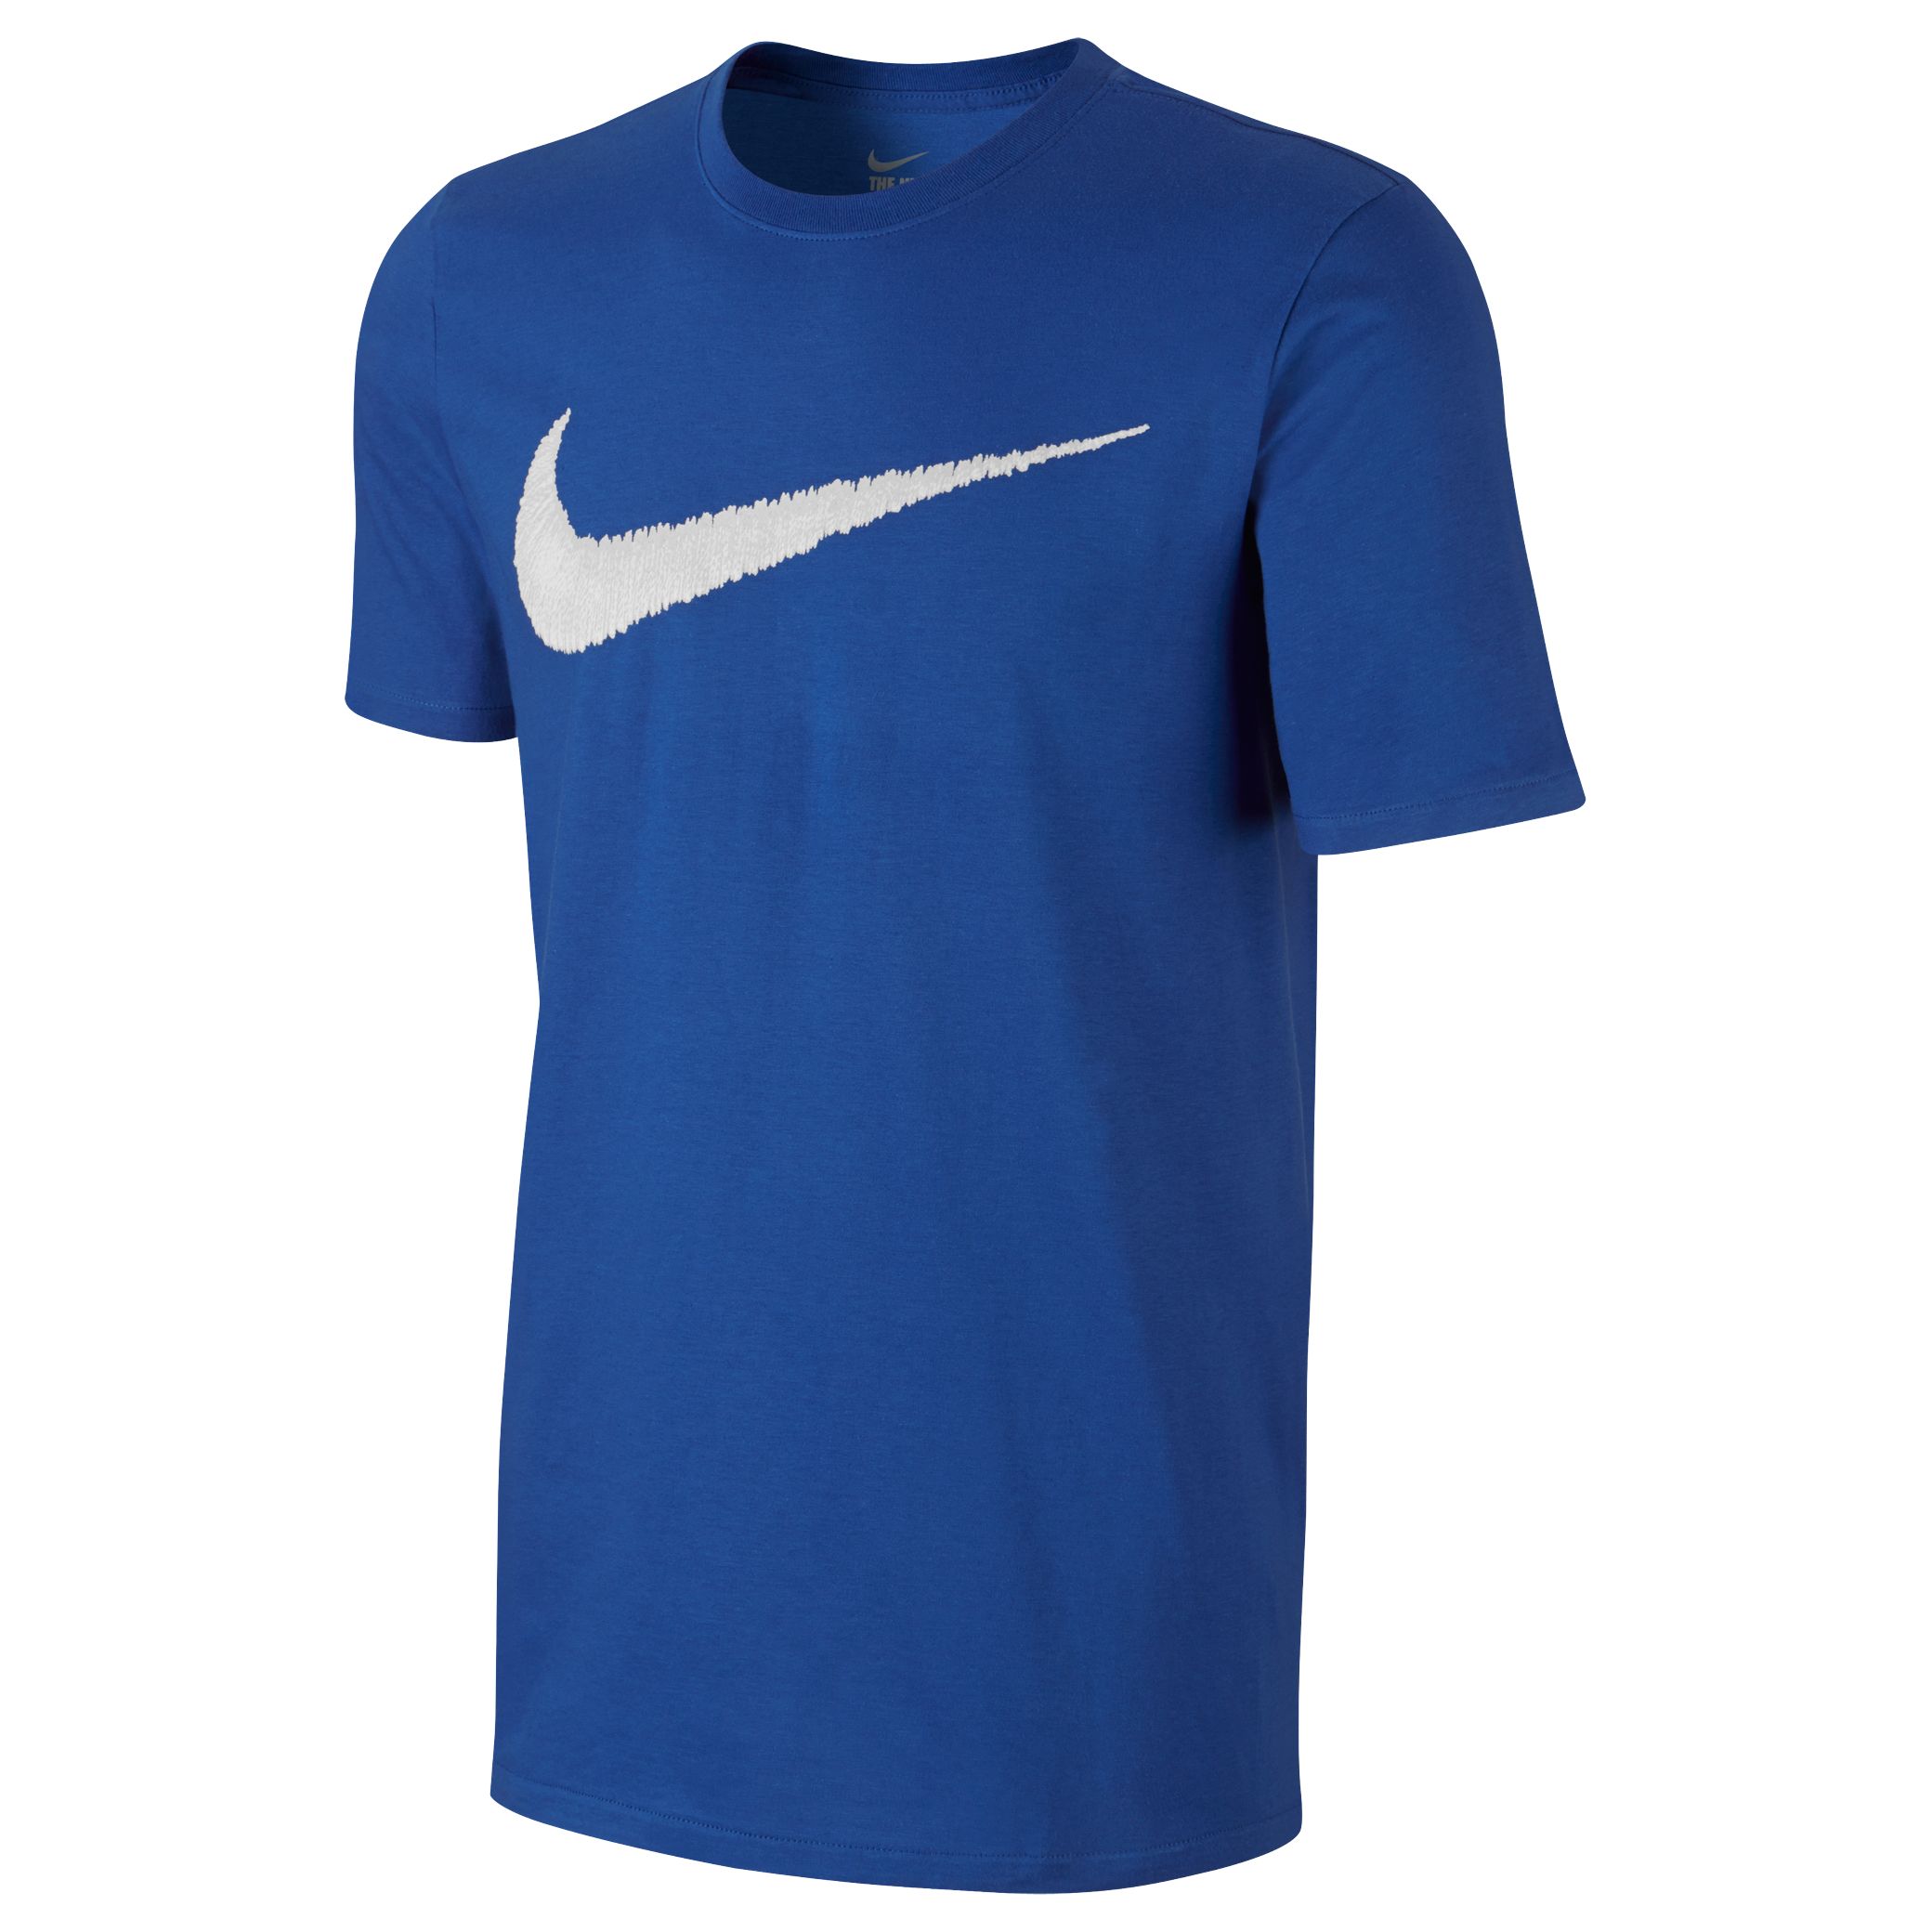 Nike Sportswear Swoosh Cotton T-Shirt, Blue/White at John Lewis & Partners